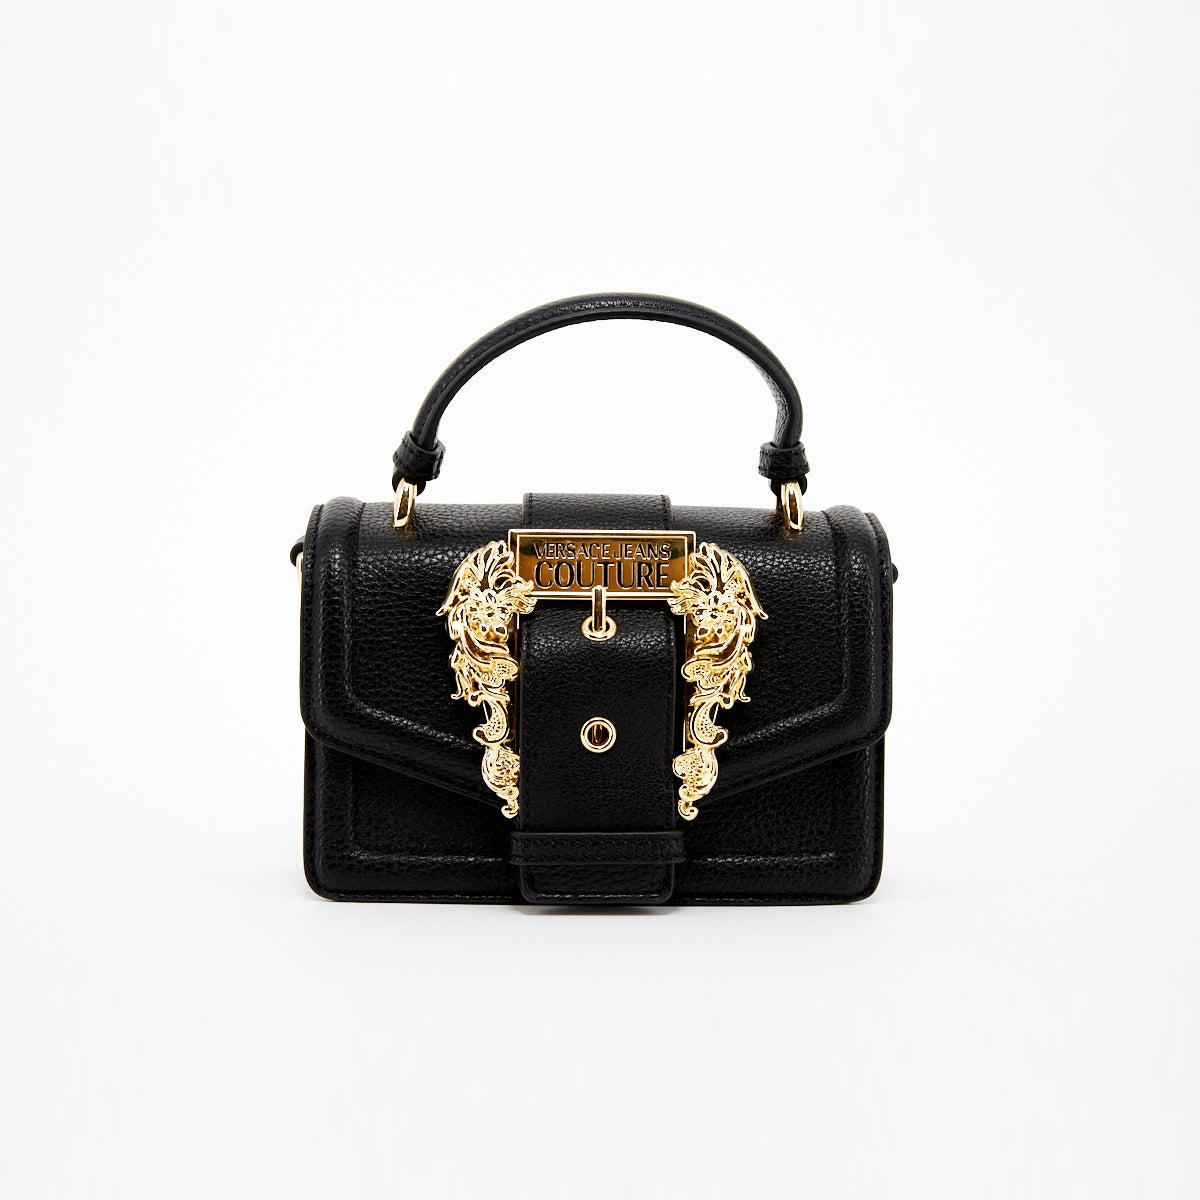 Versace Jeans Couture Borse Women's Bag in Nero (Black) | Lyst Canada